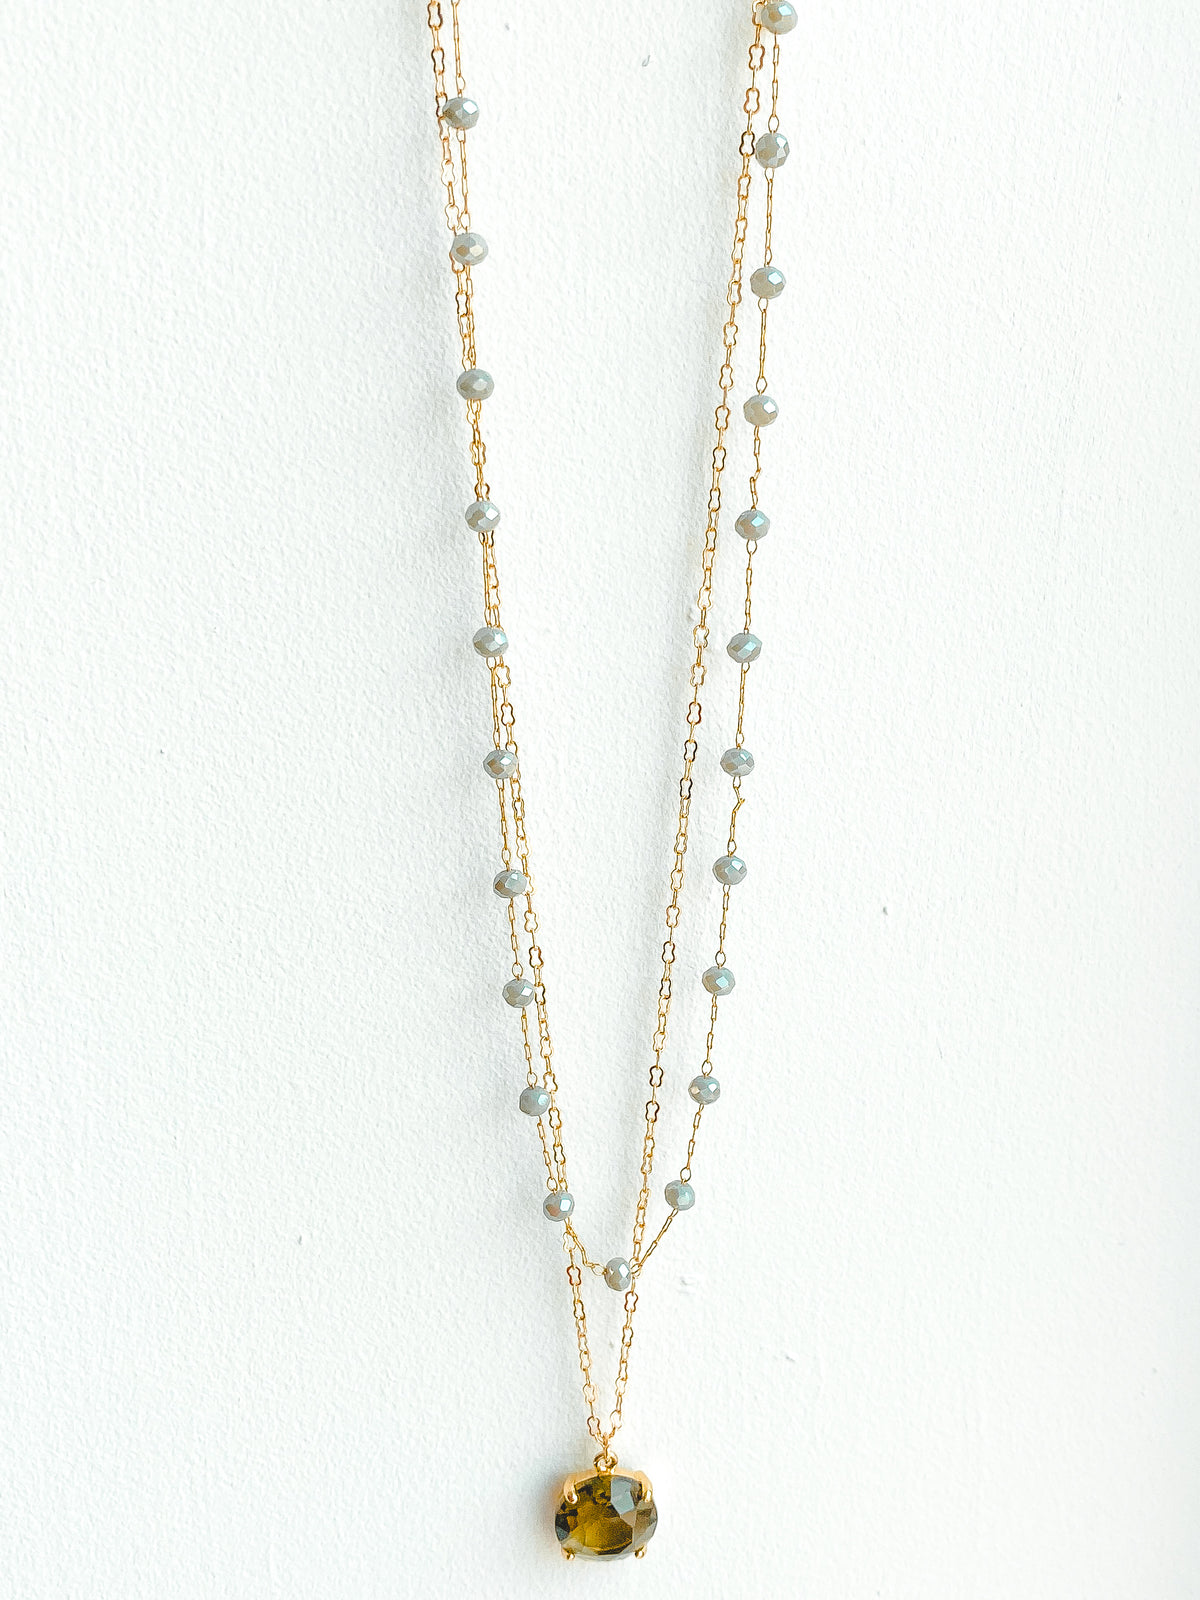 Crystal & Diamond Layered Necklace-Grey/Black